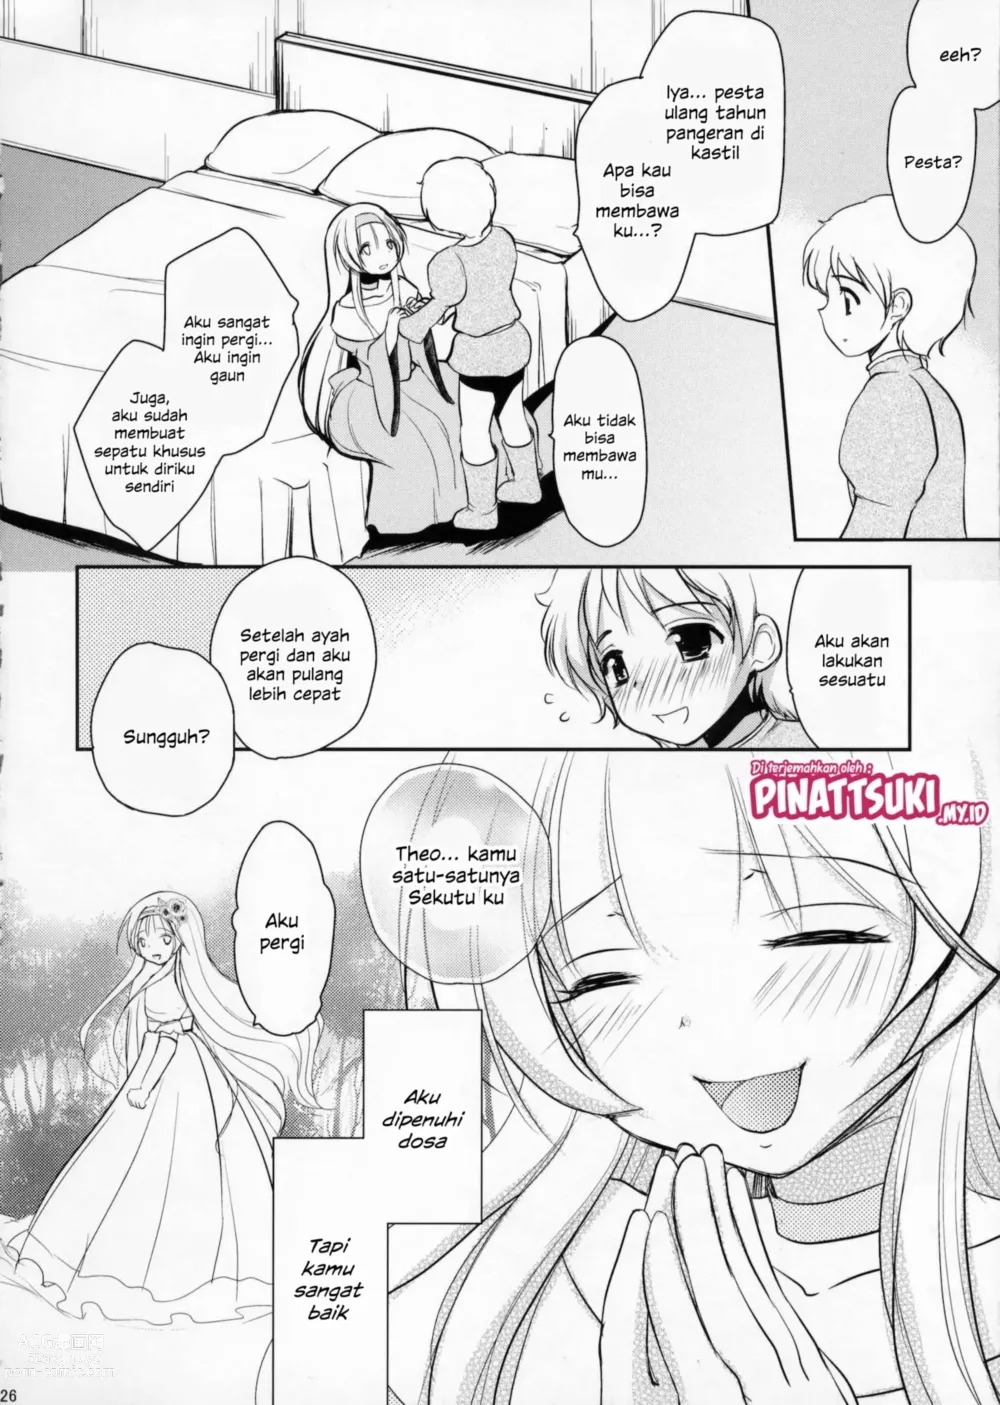 Page 26 of doujinshi Otokonoko Cinderella